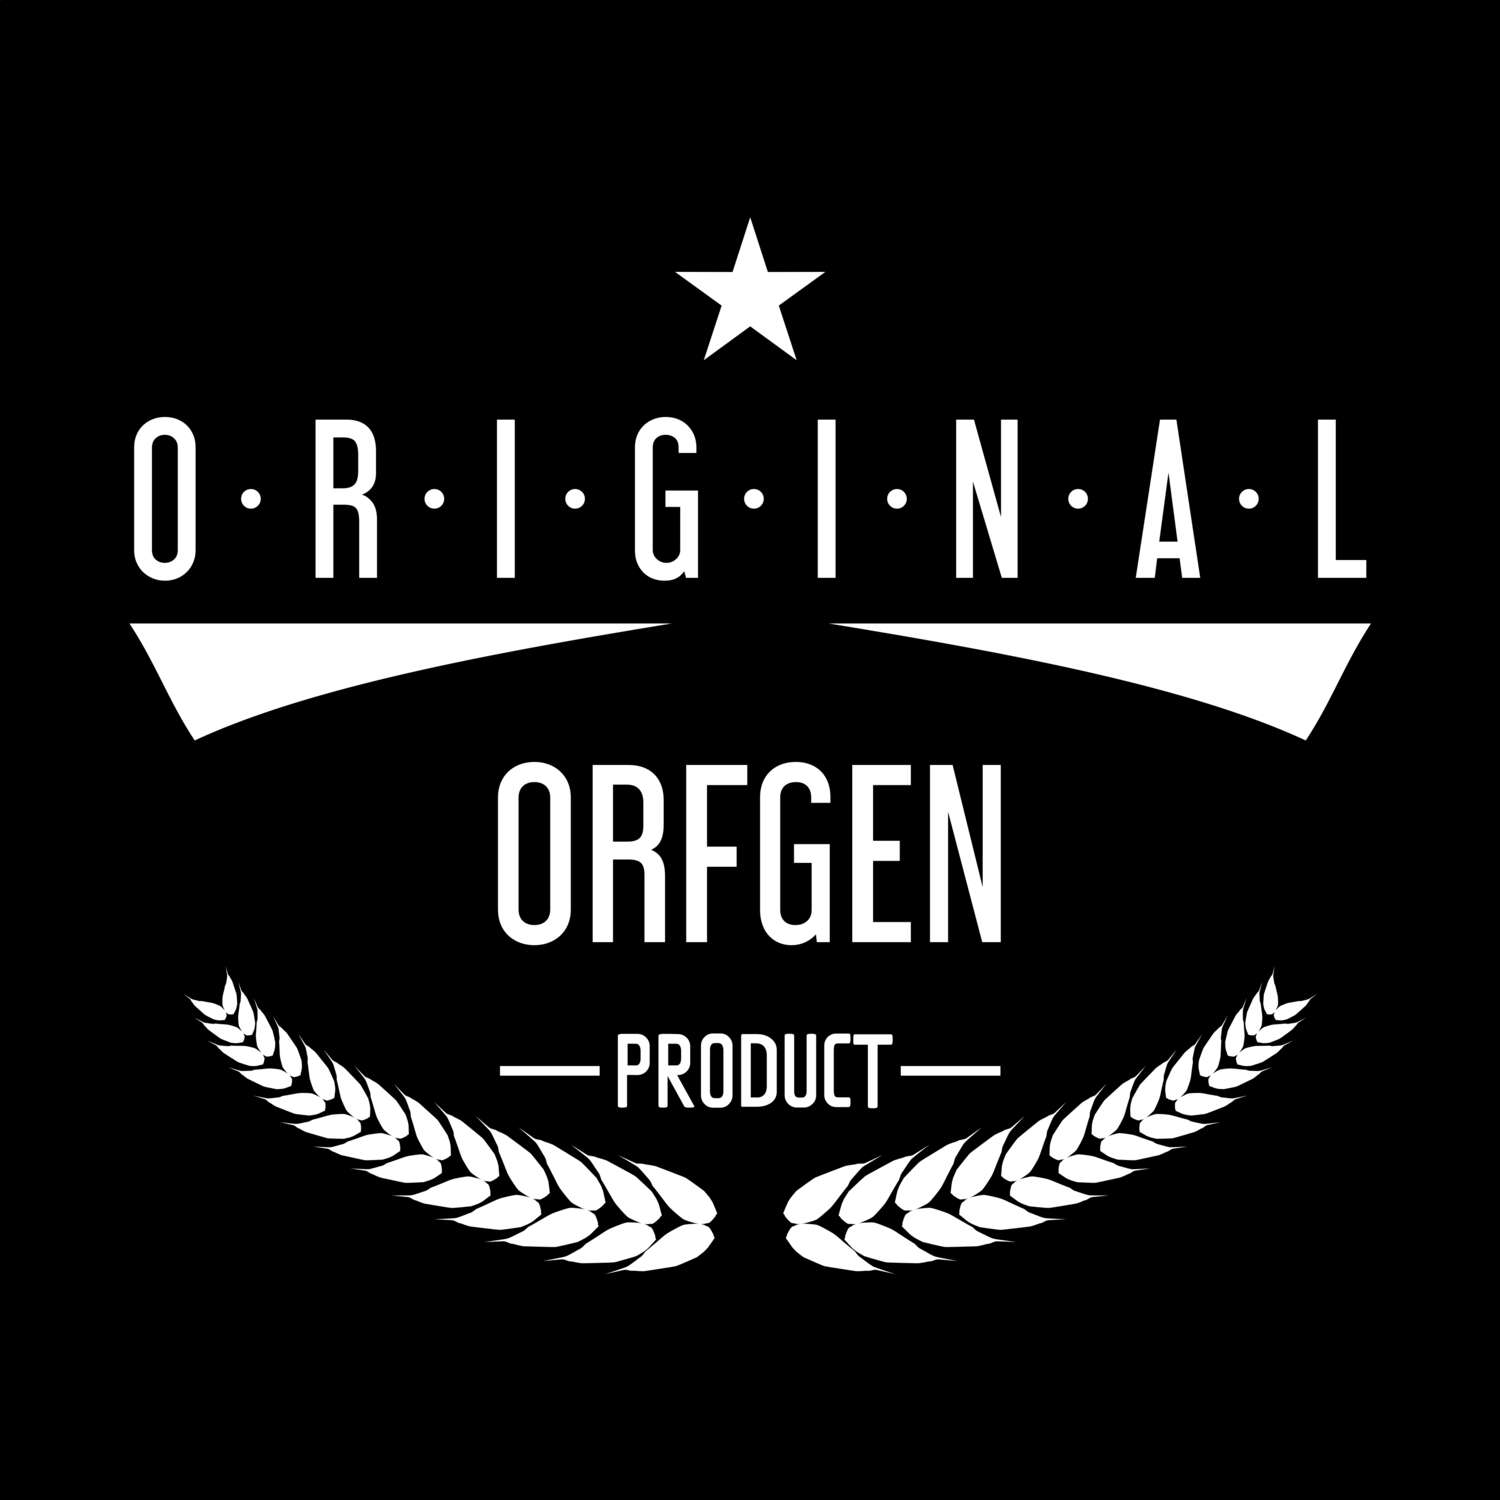 Orfgen T-Shirt »Original Product«